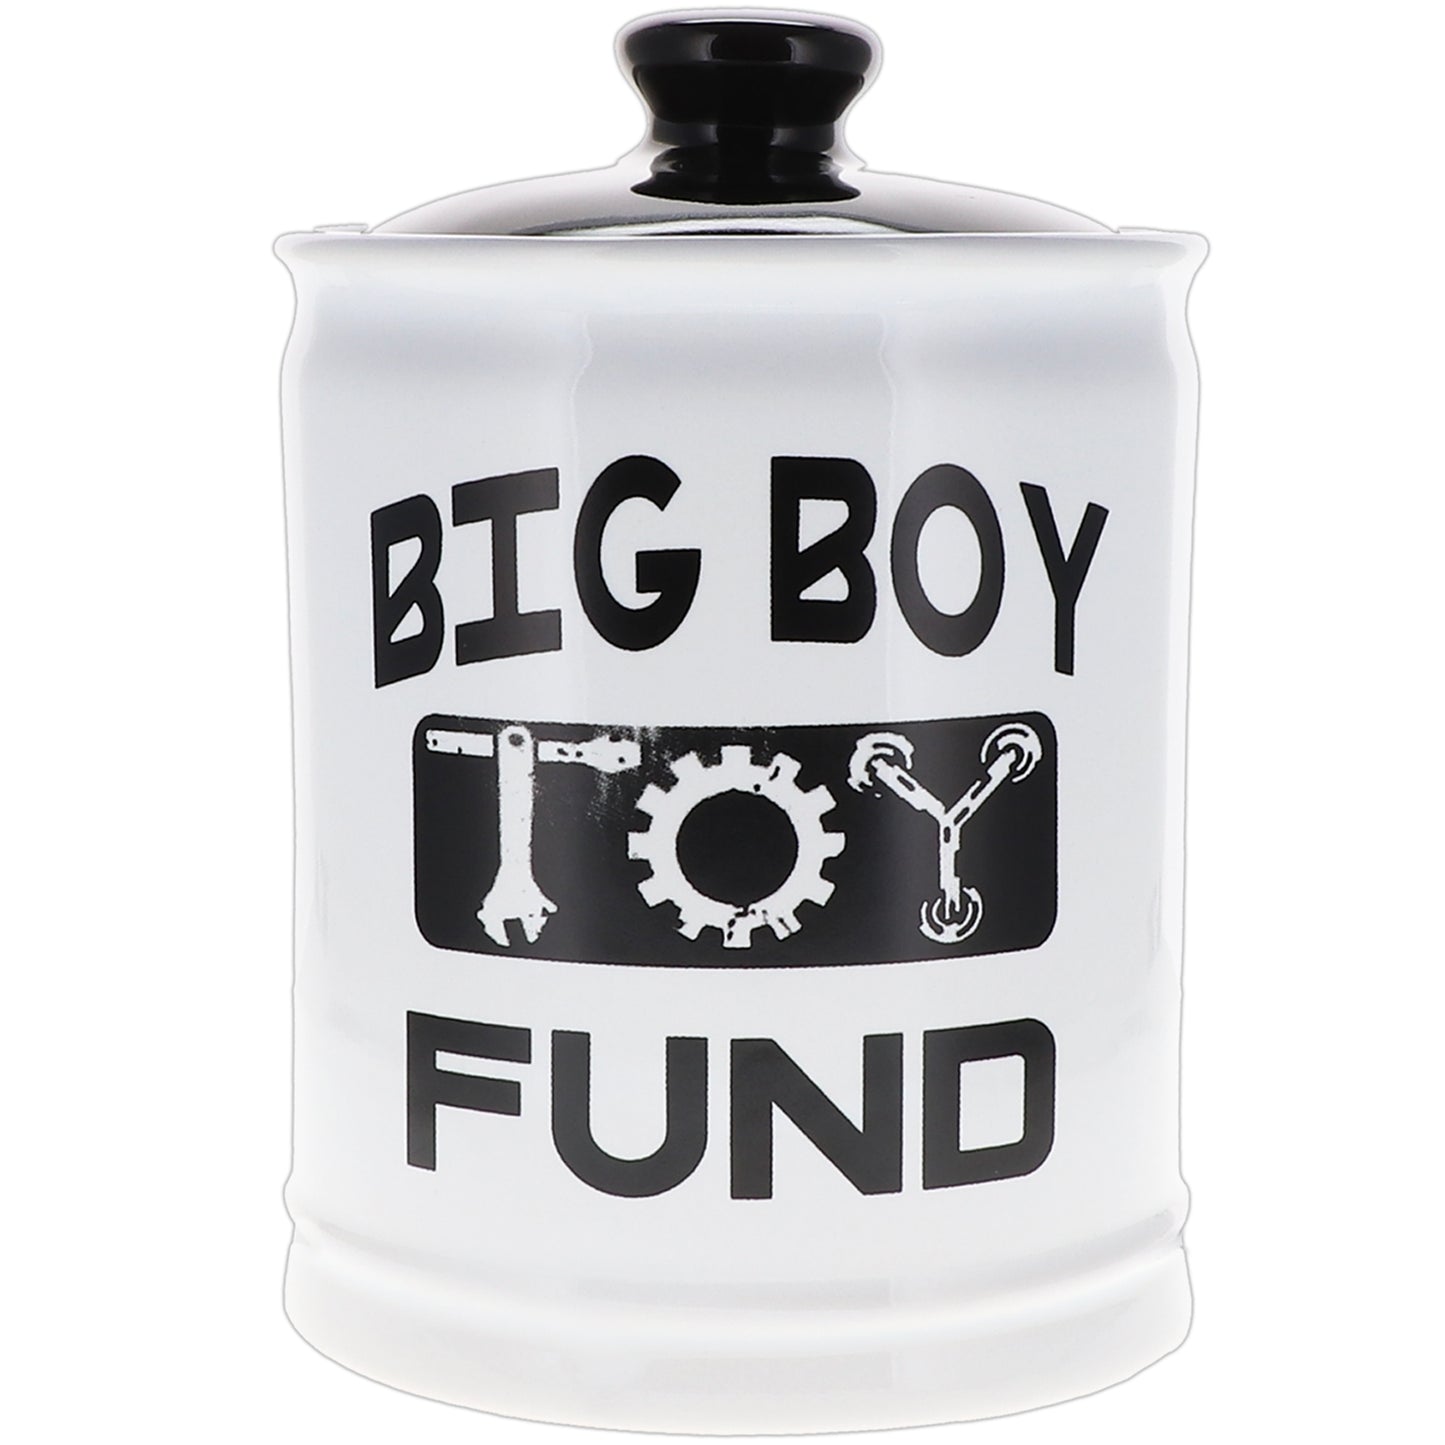 Cottage Creek Big Boy Toy Fund Piggy Bank, Ceramic, 6", Multicolored Candy Jar